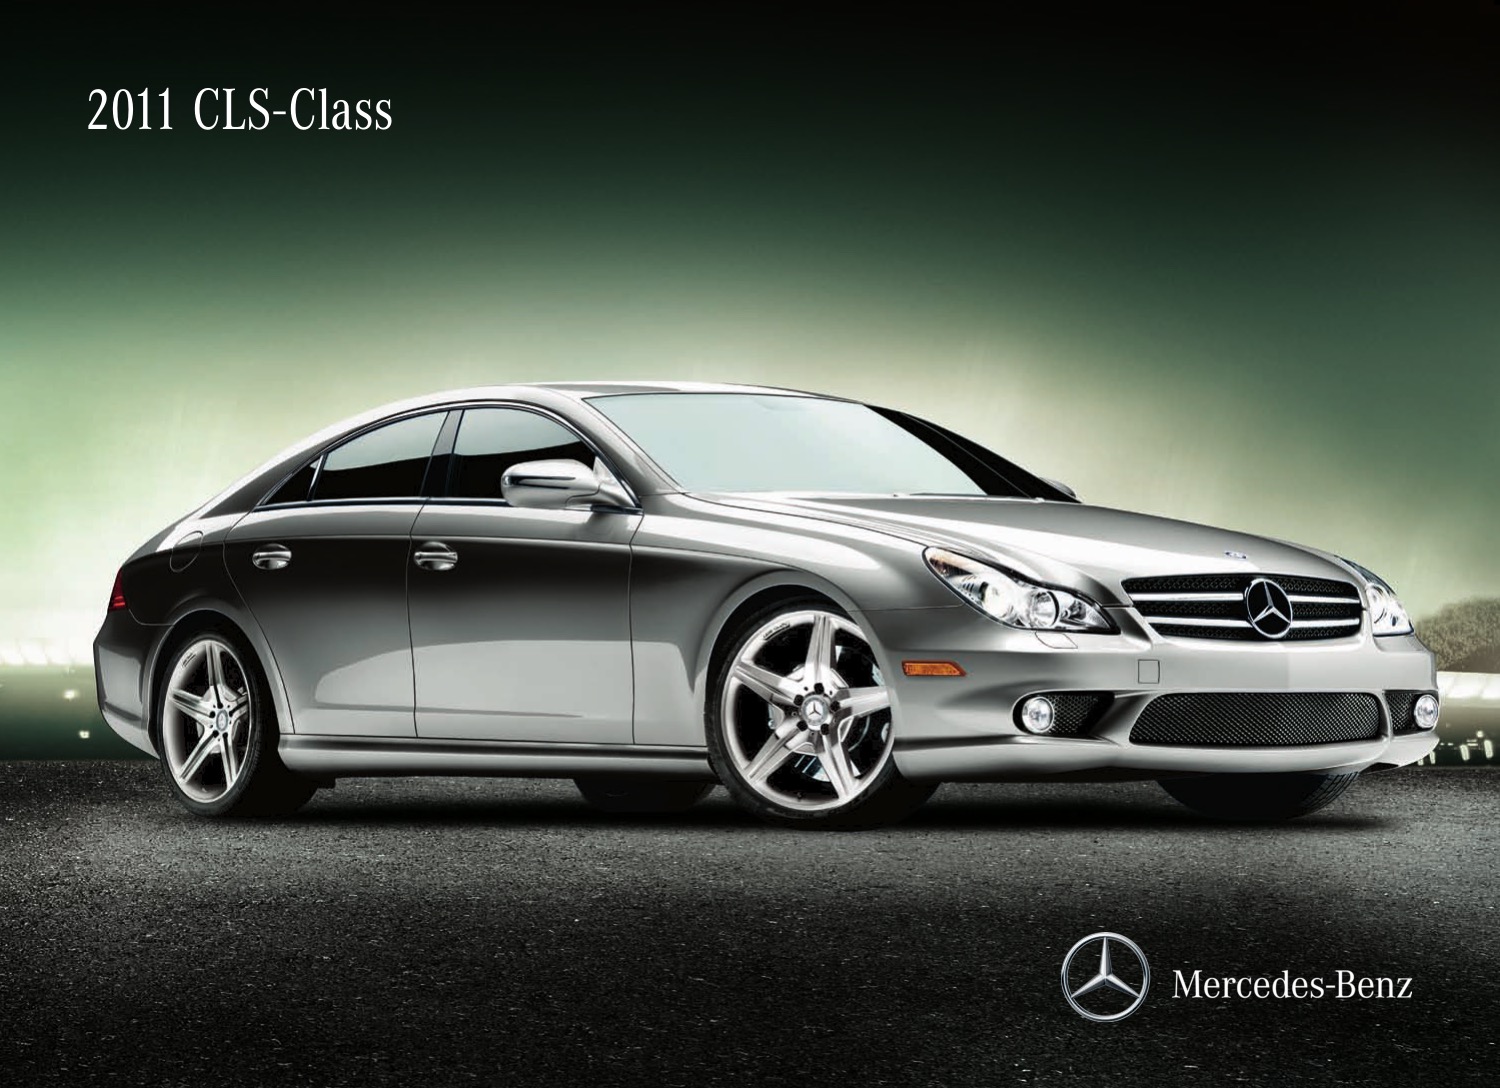 2011 Mercedes-Benz CLS-Class Brochure